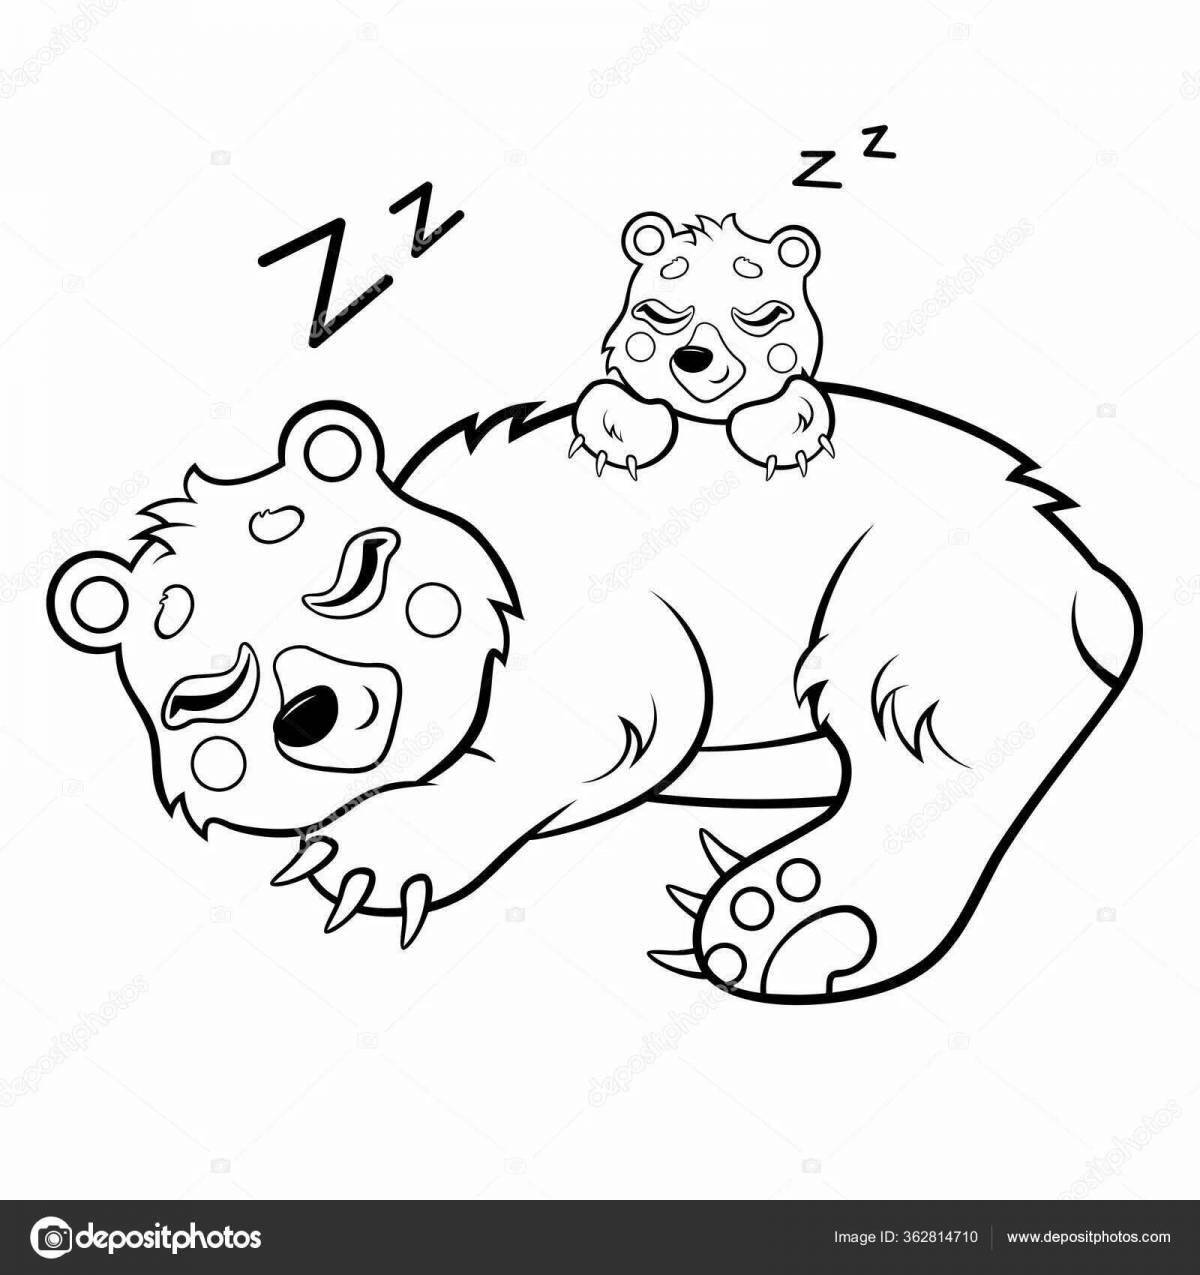 Cute bear in the den coloring book